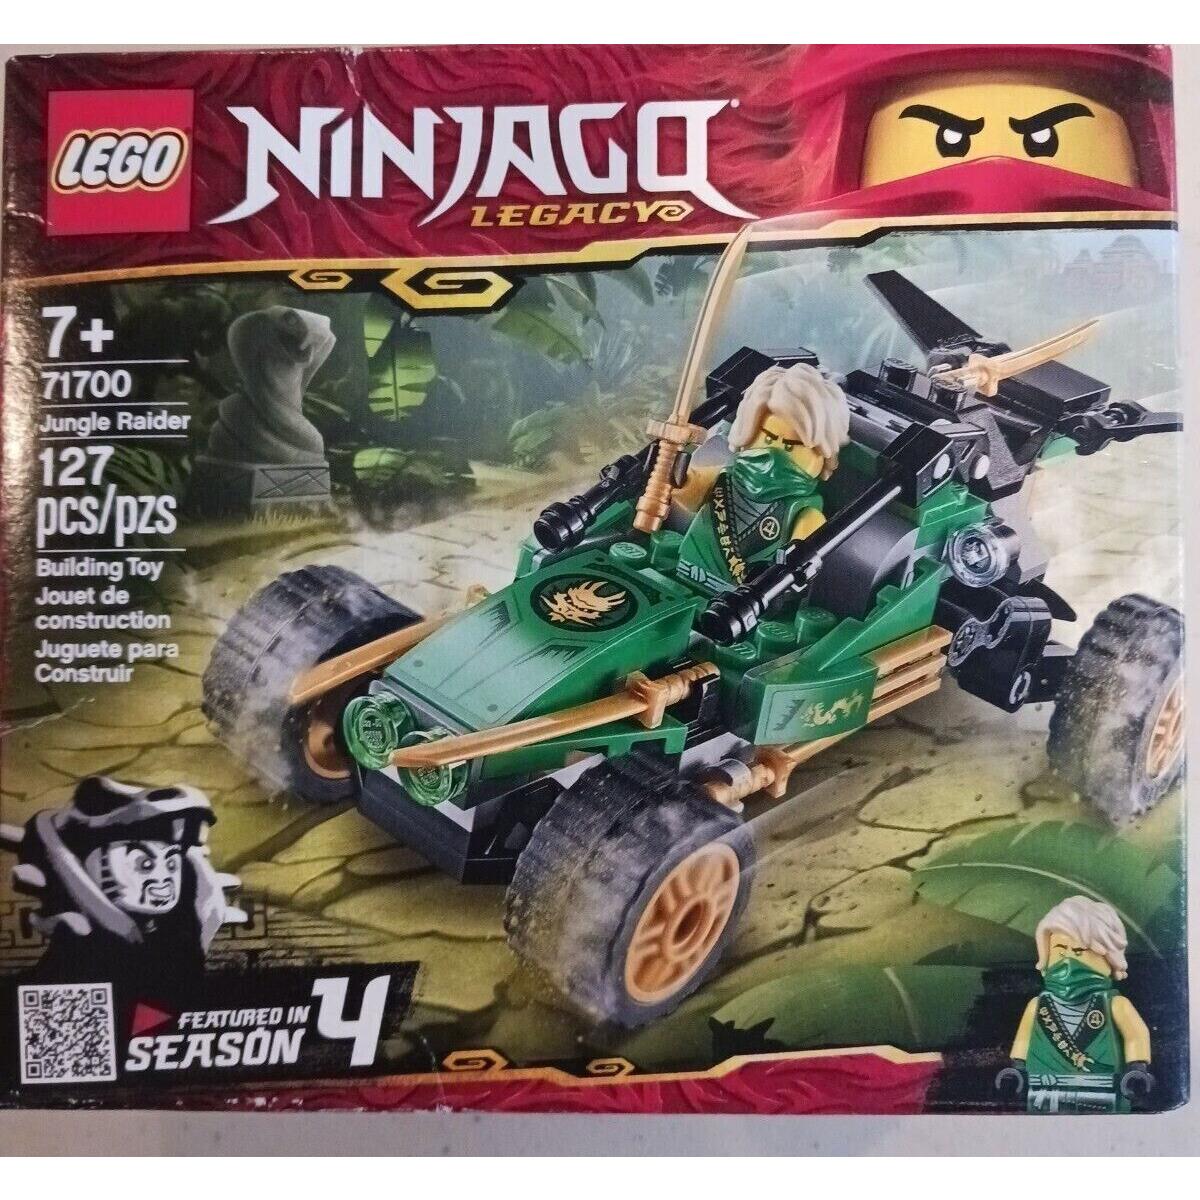 Lego Jungle Raider Ninjago 71700 Building Kit 127 Pcs Car Model Toy Retired Set